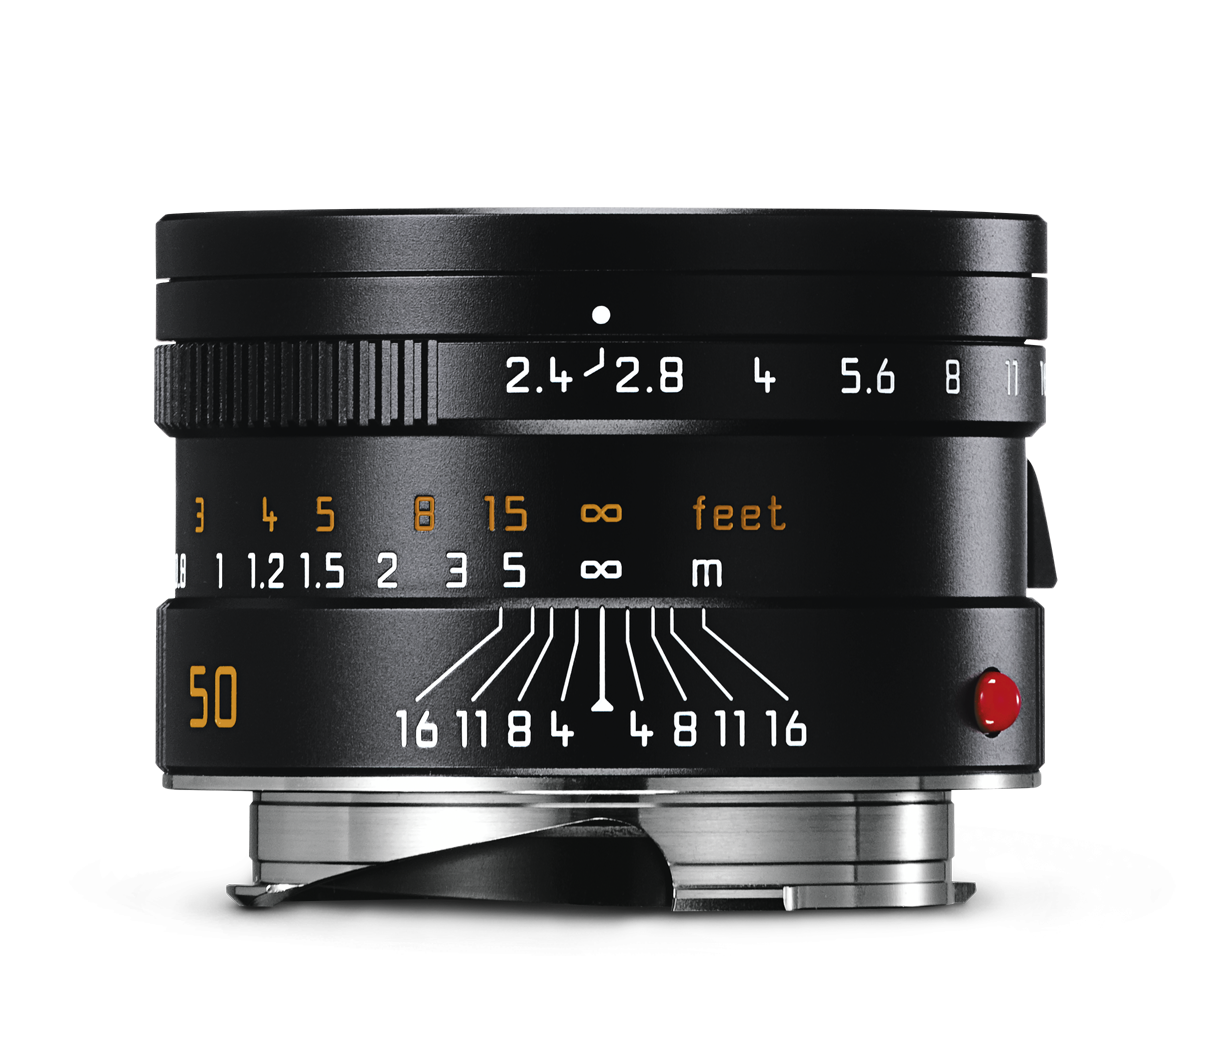 Summarit-M 50 f/2.4 | Leica Camera US